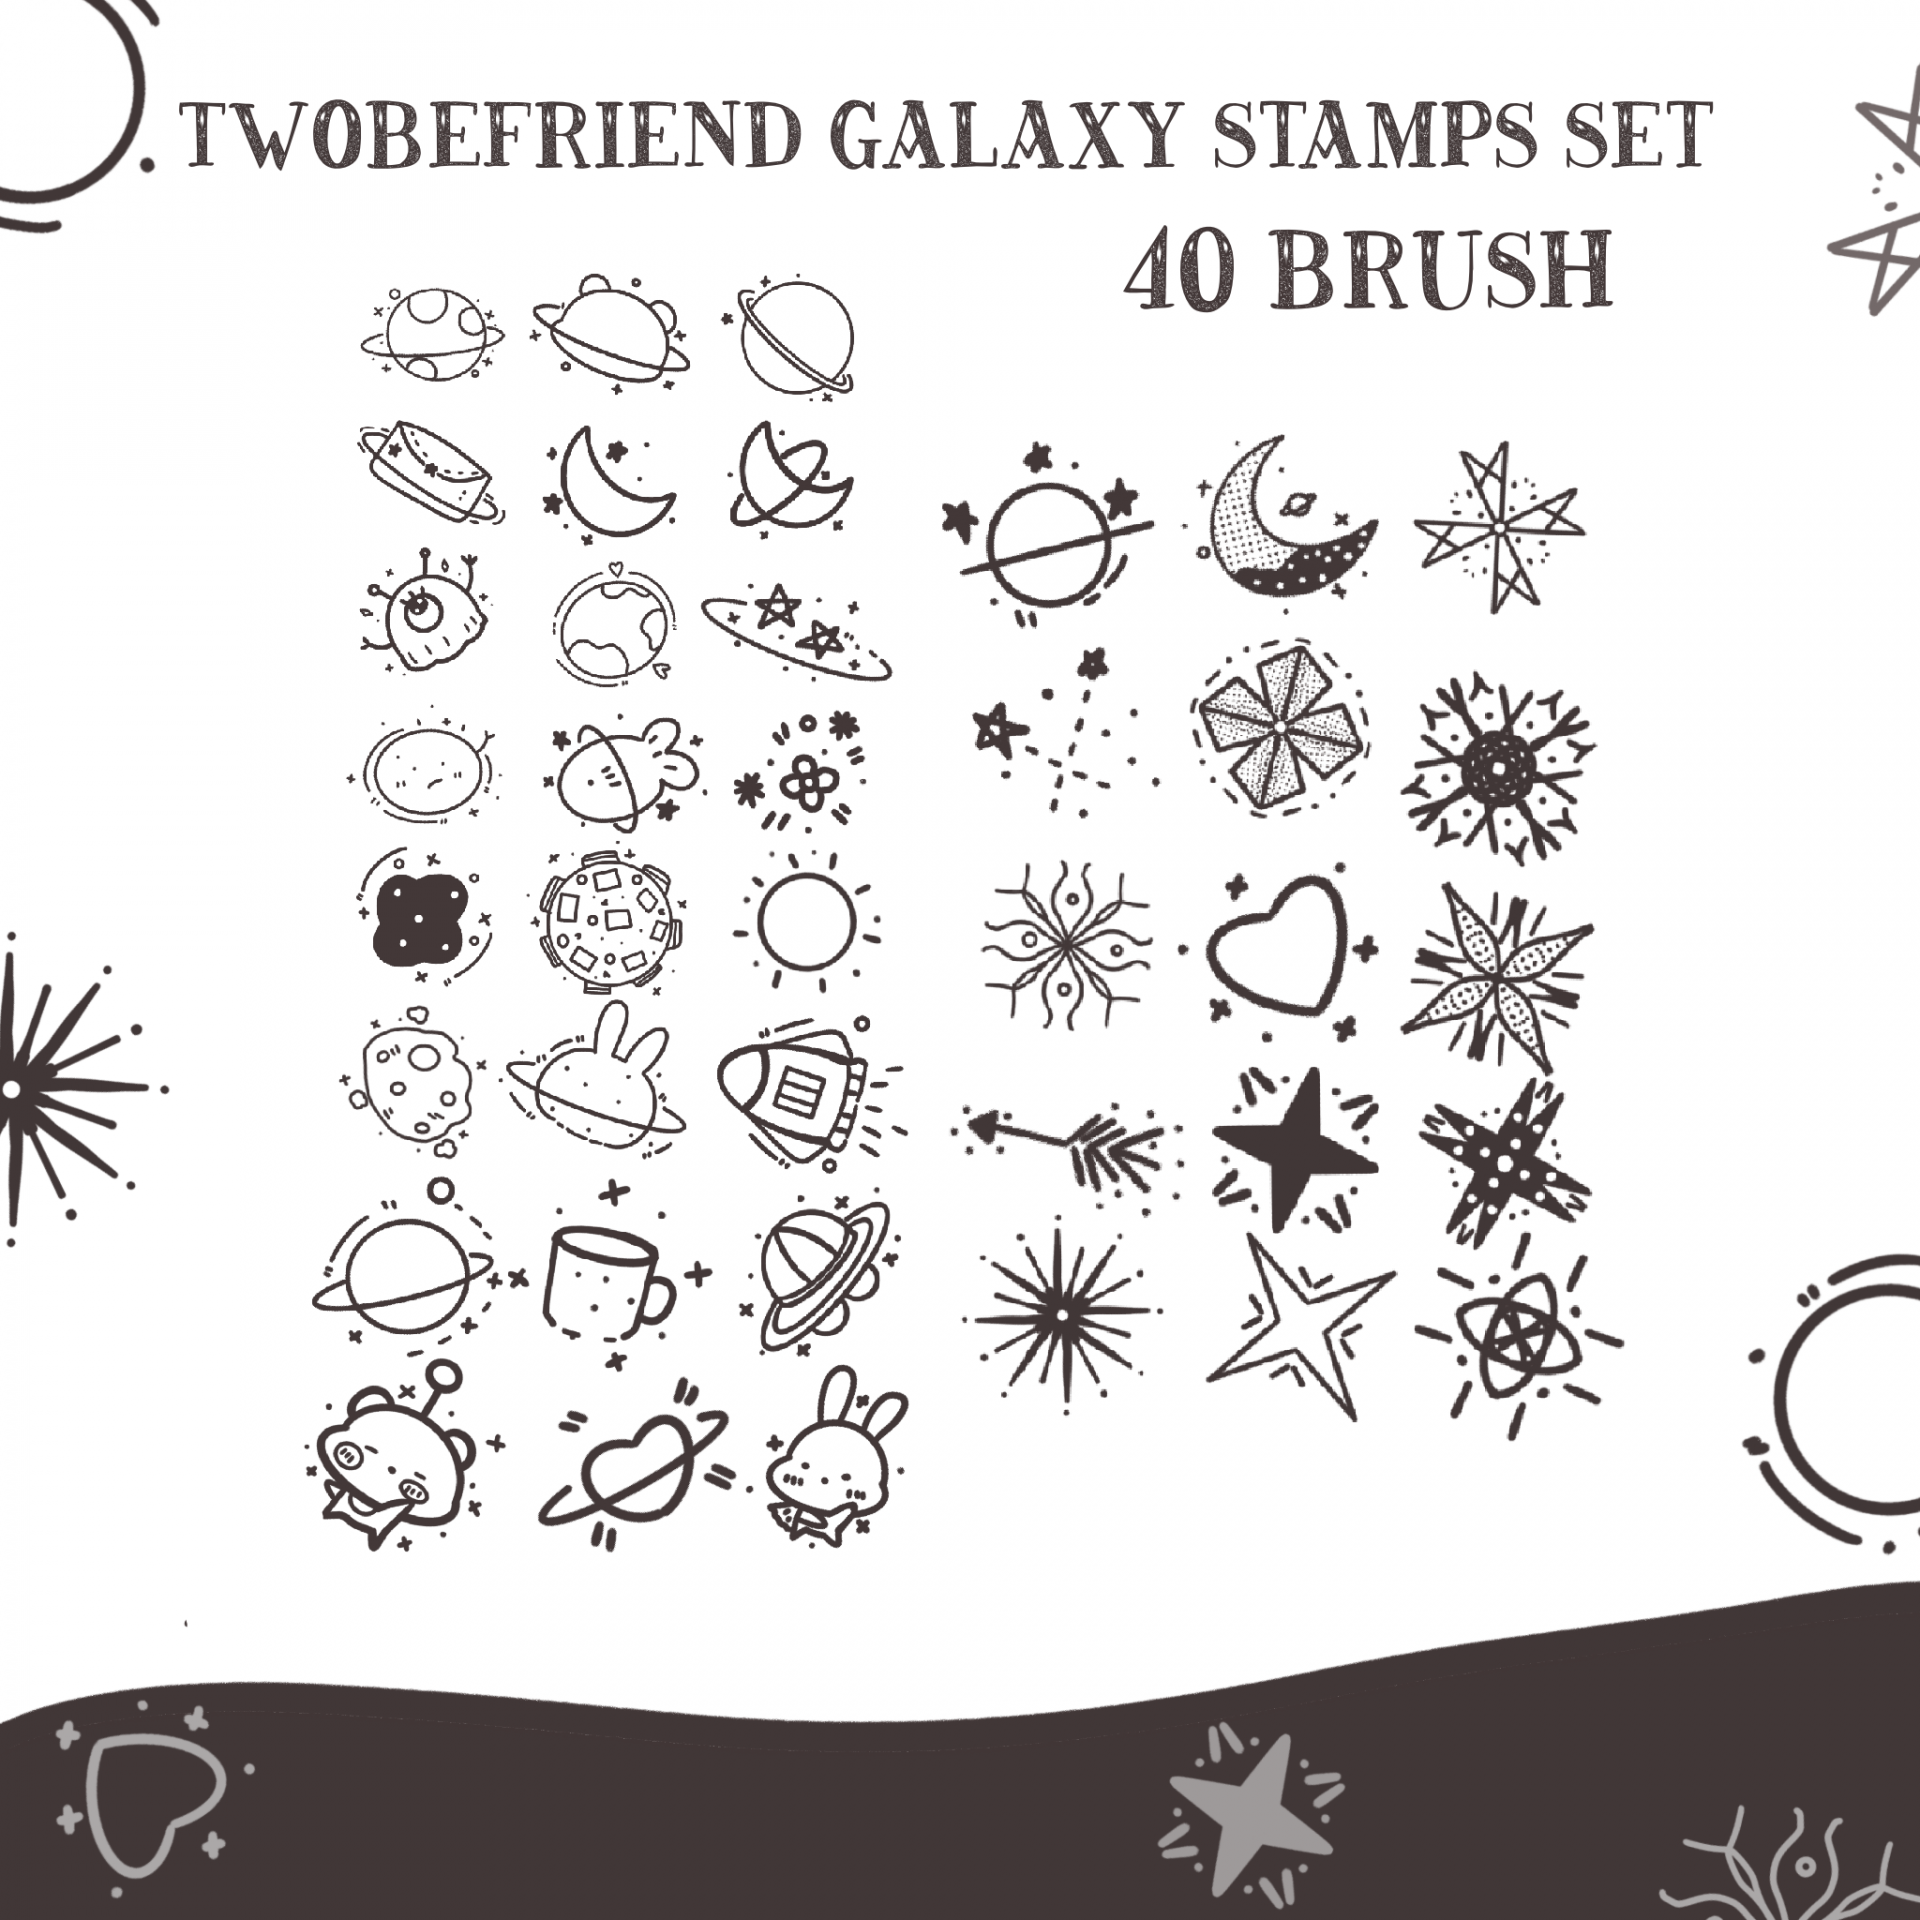 Twobefriend Galaxy Stamps Set |PROCREAT BRUSHED|